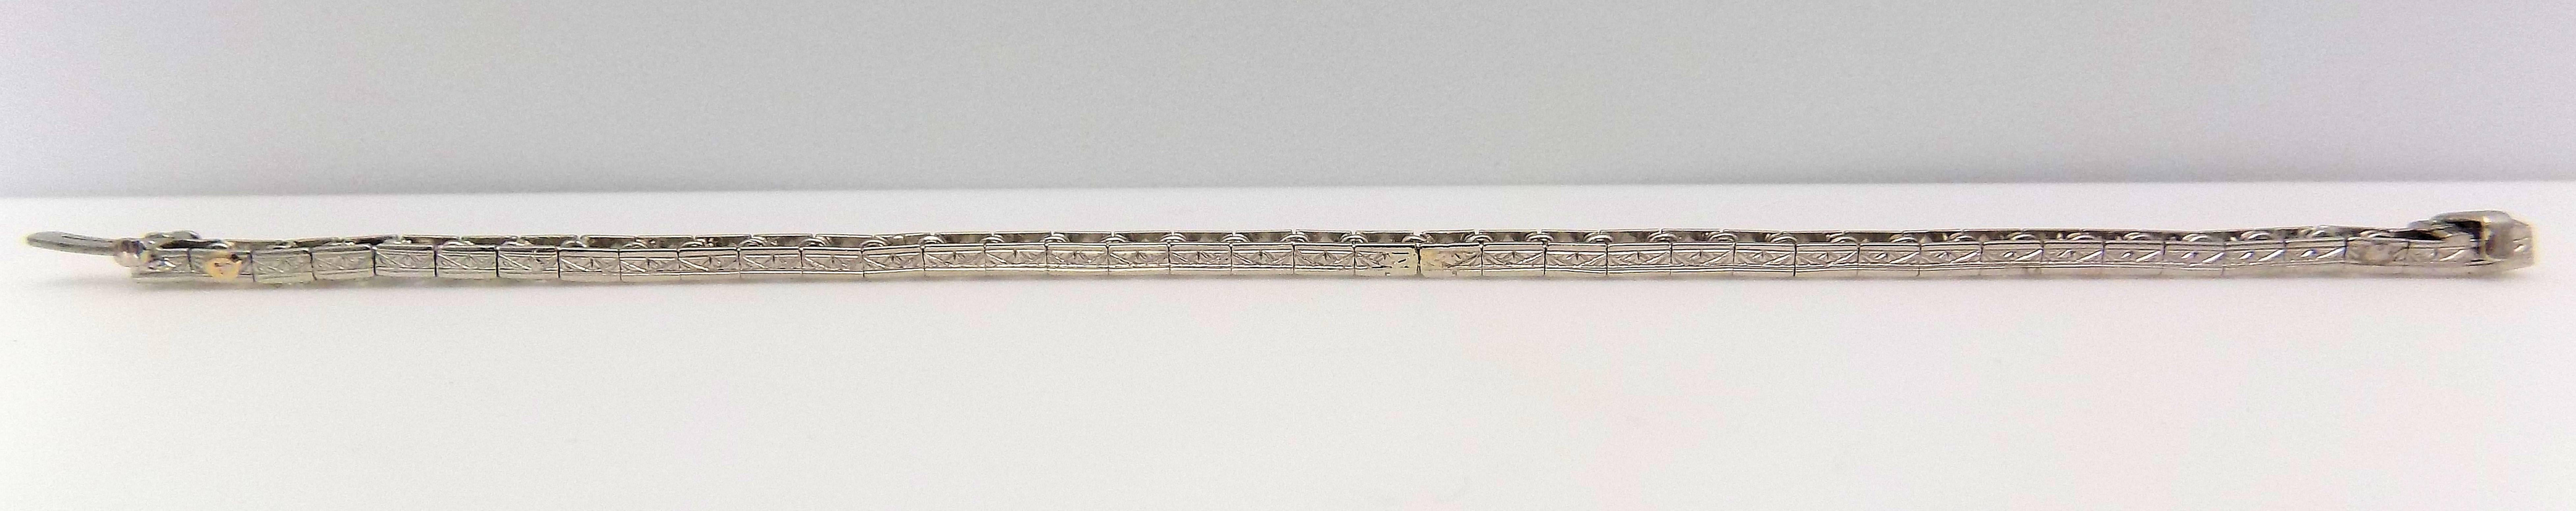 Antique Platinum Line Diamond Bracelet by Marcus and Co. 1